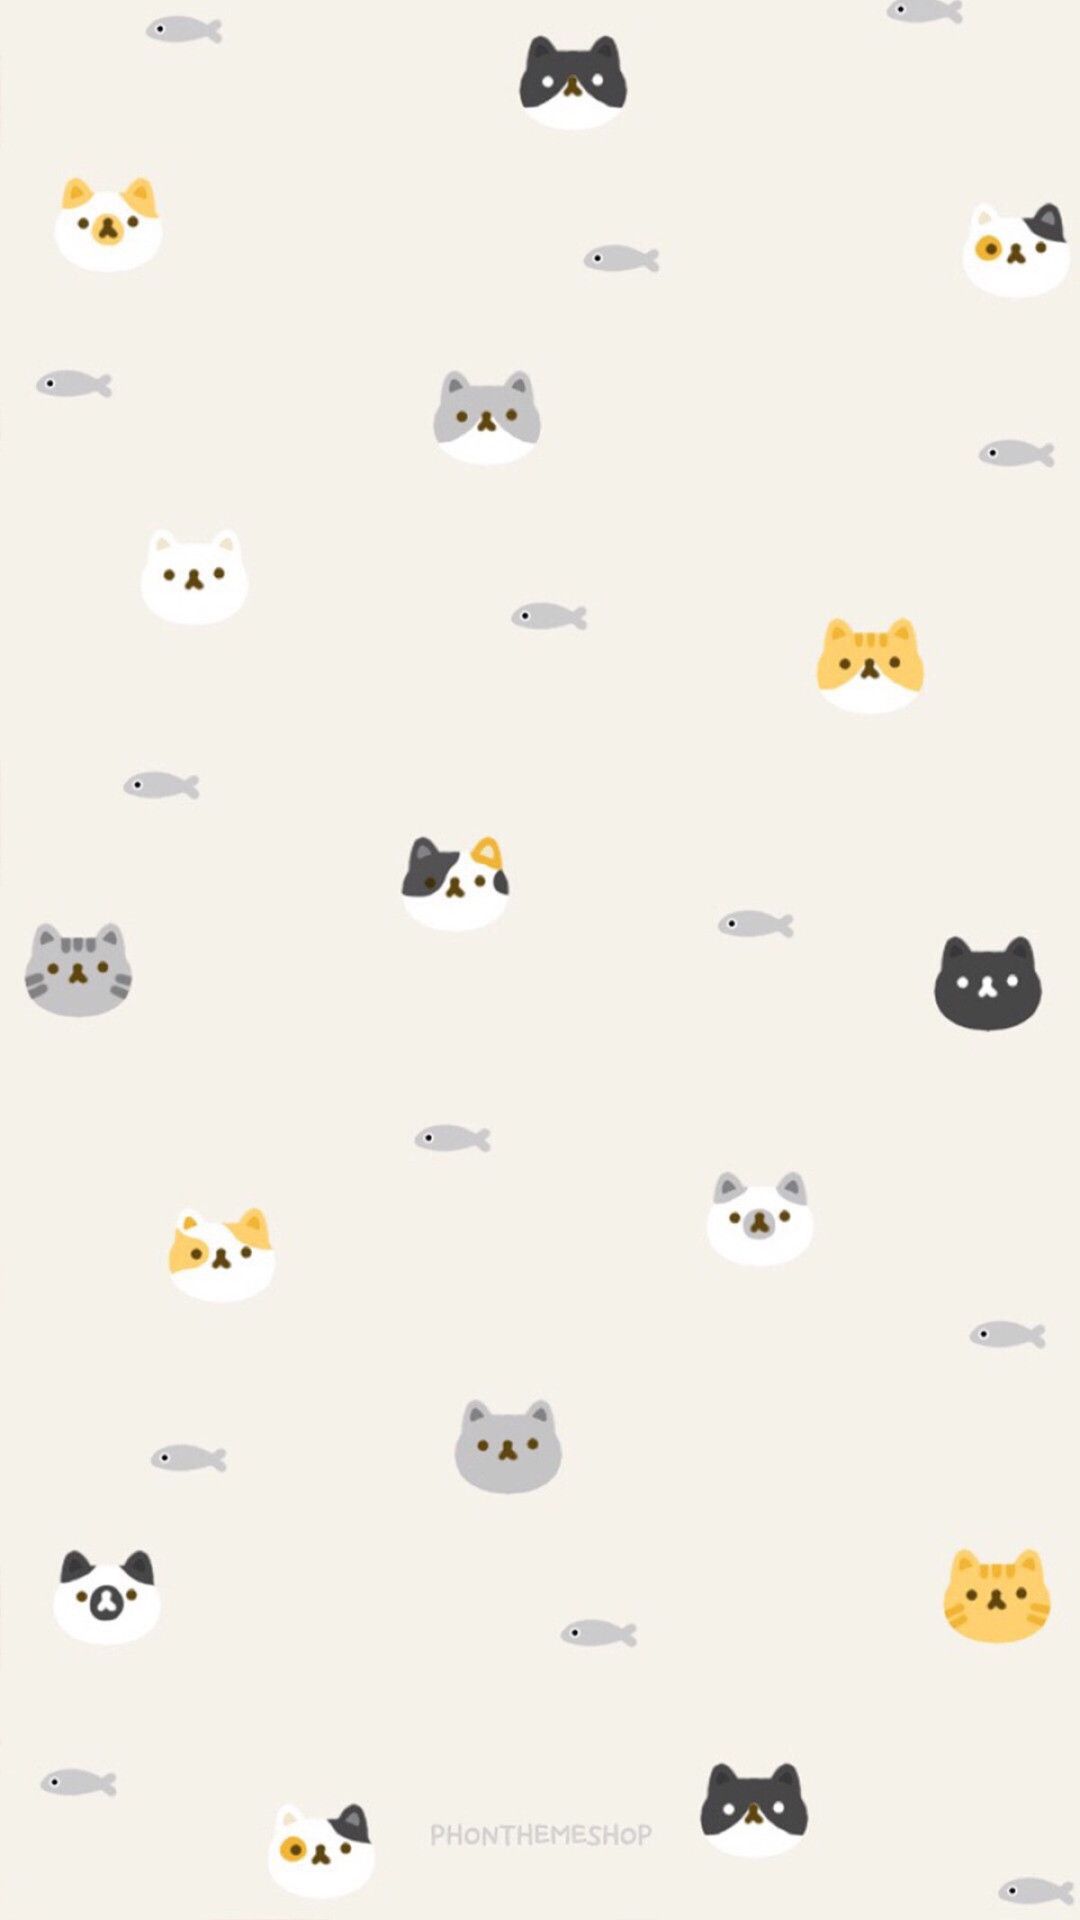 Top 999+ Cute Simple Wallpaper Full HD, 4K✓Free to Use